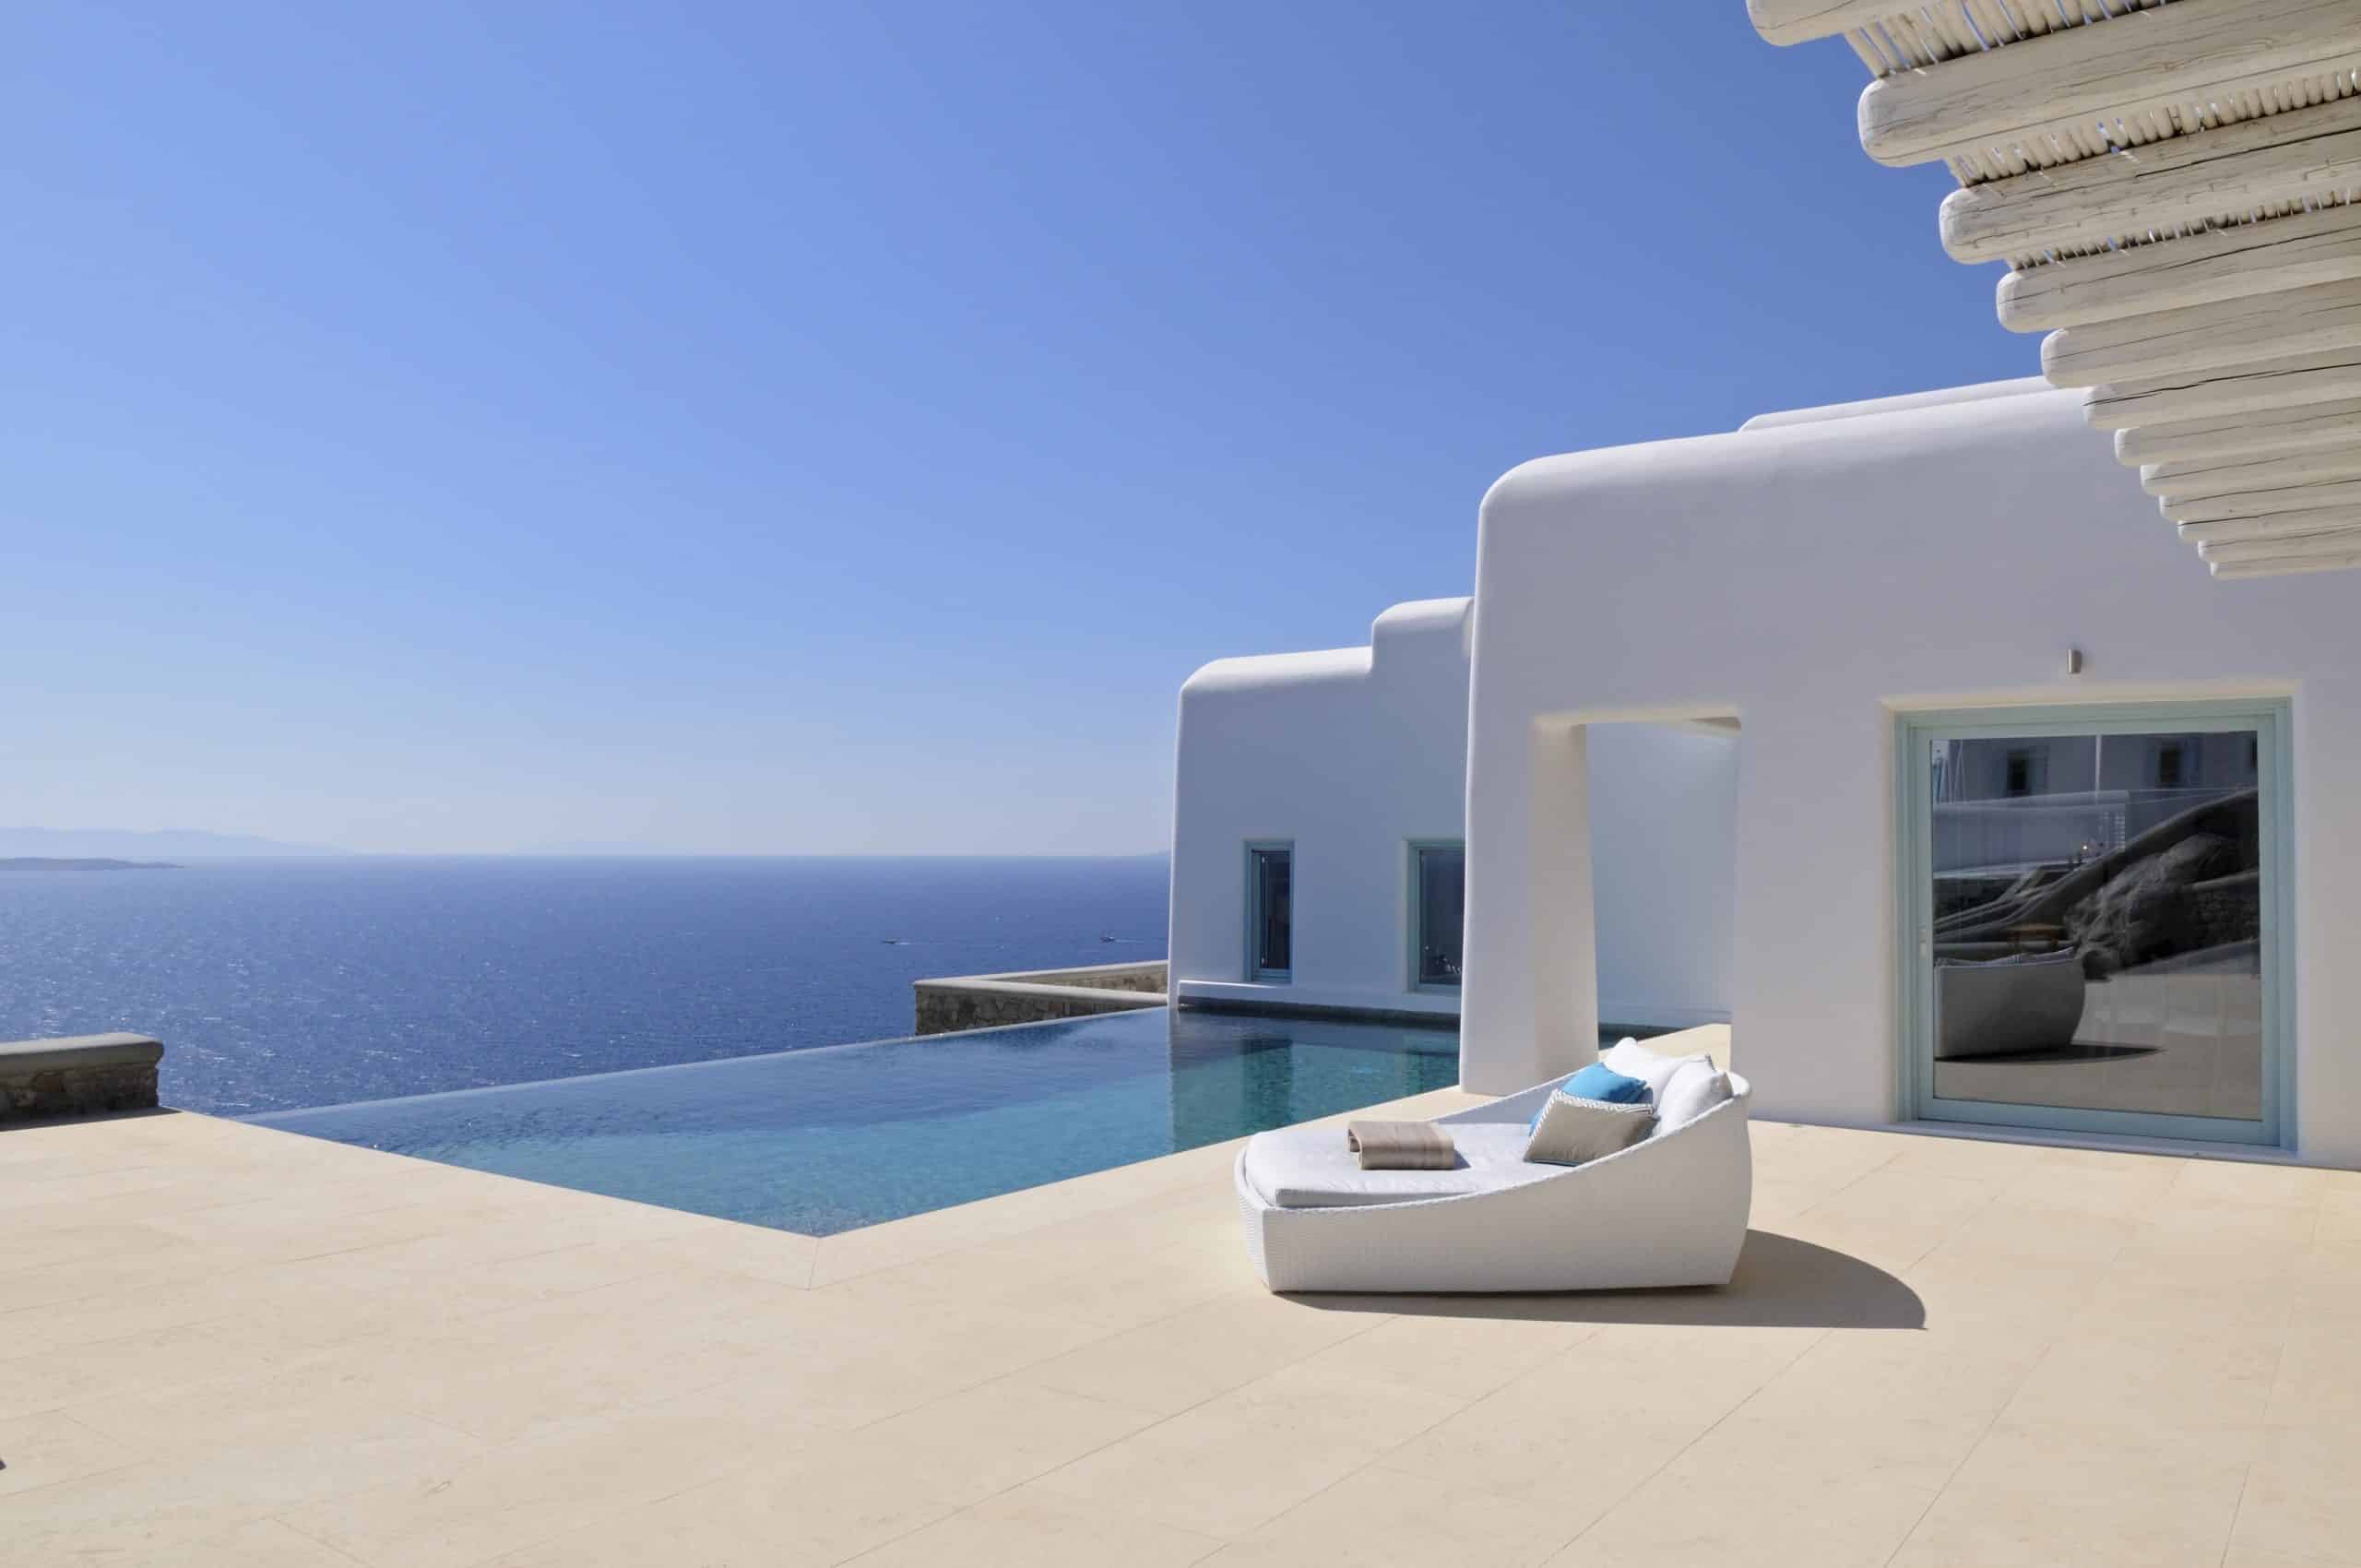 Location villas privées Gréce piscine